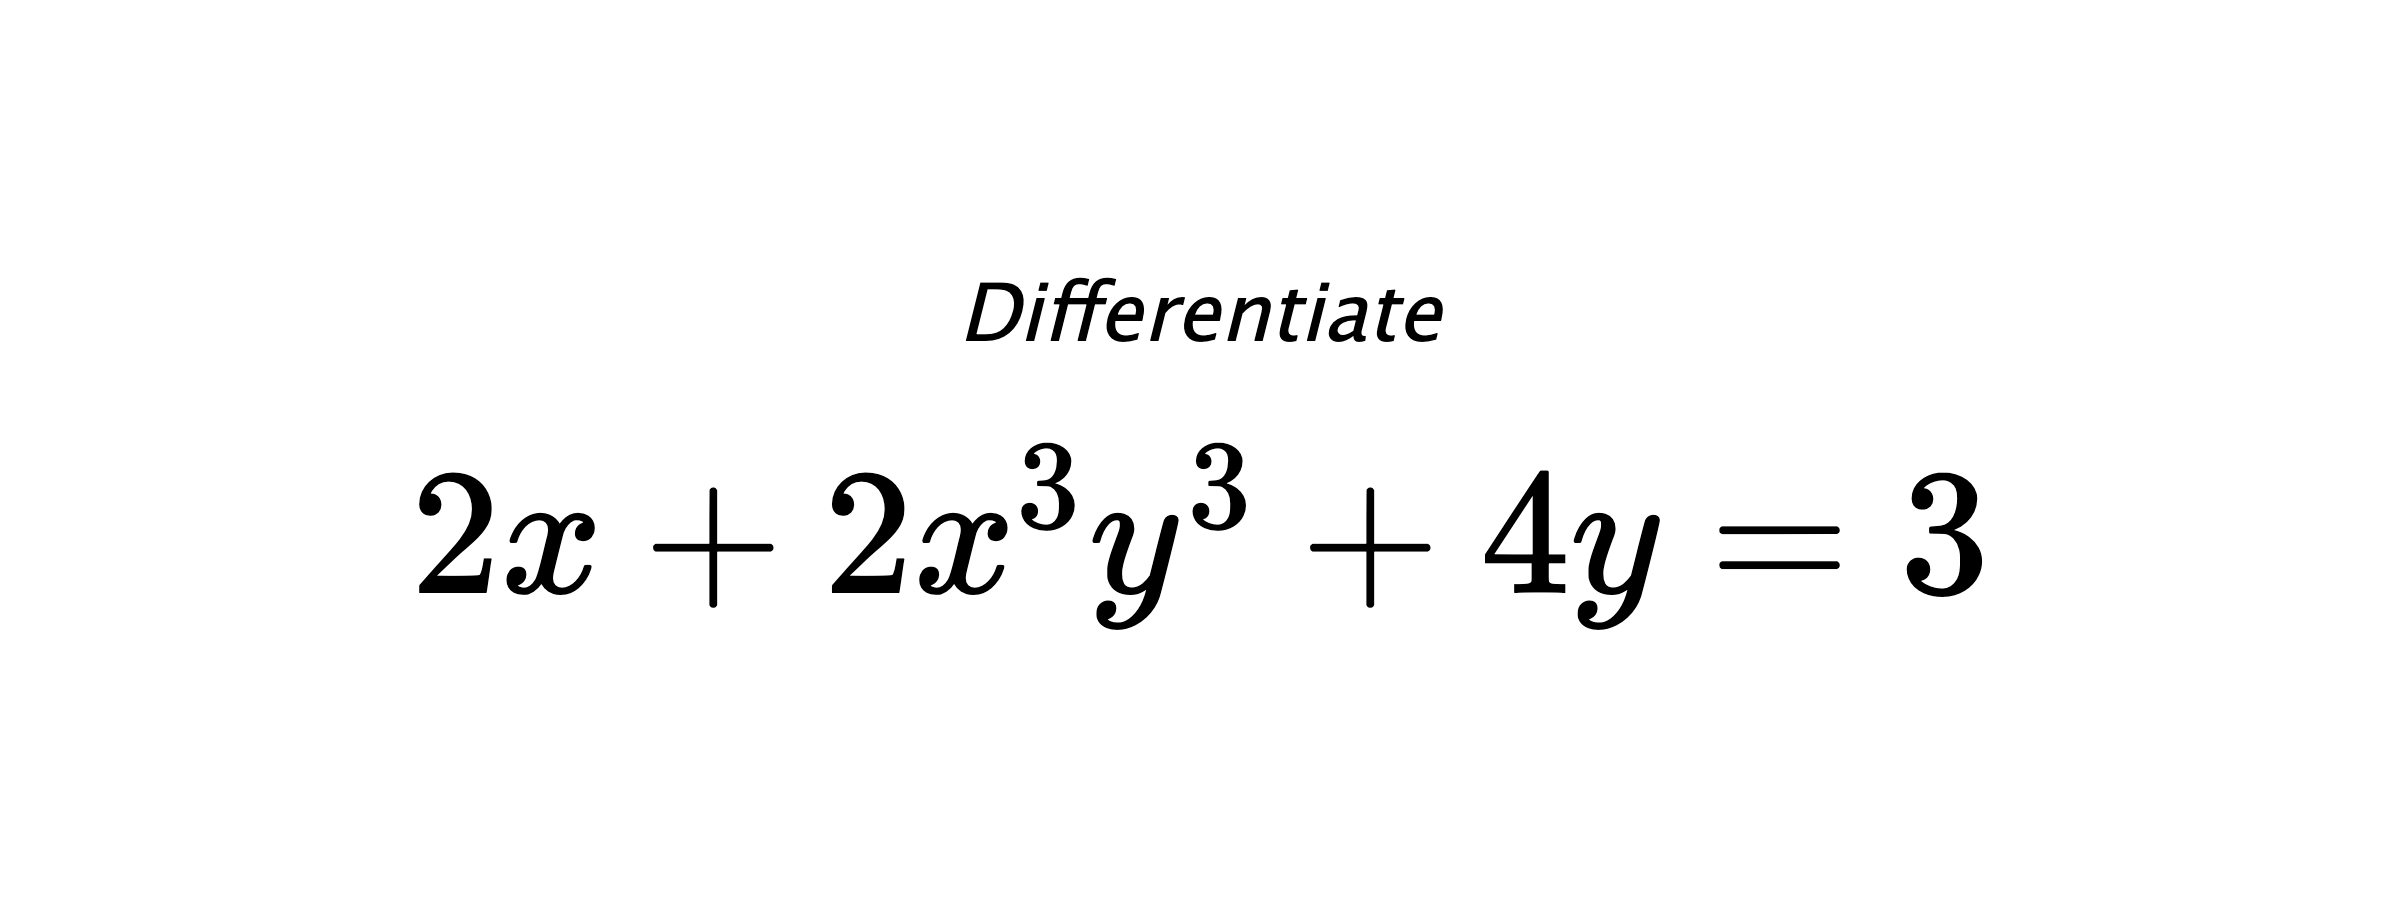 Differentiate $ 2x+2x^3y^3+4y = 3 $